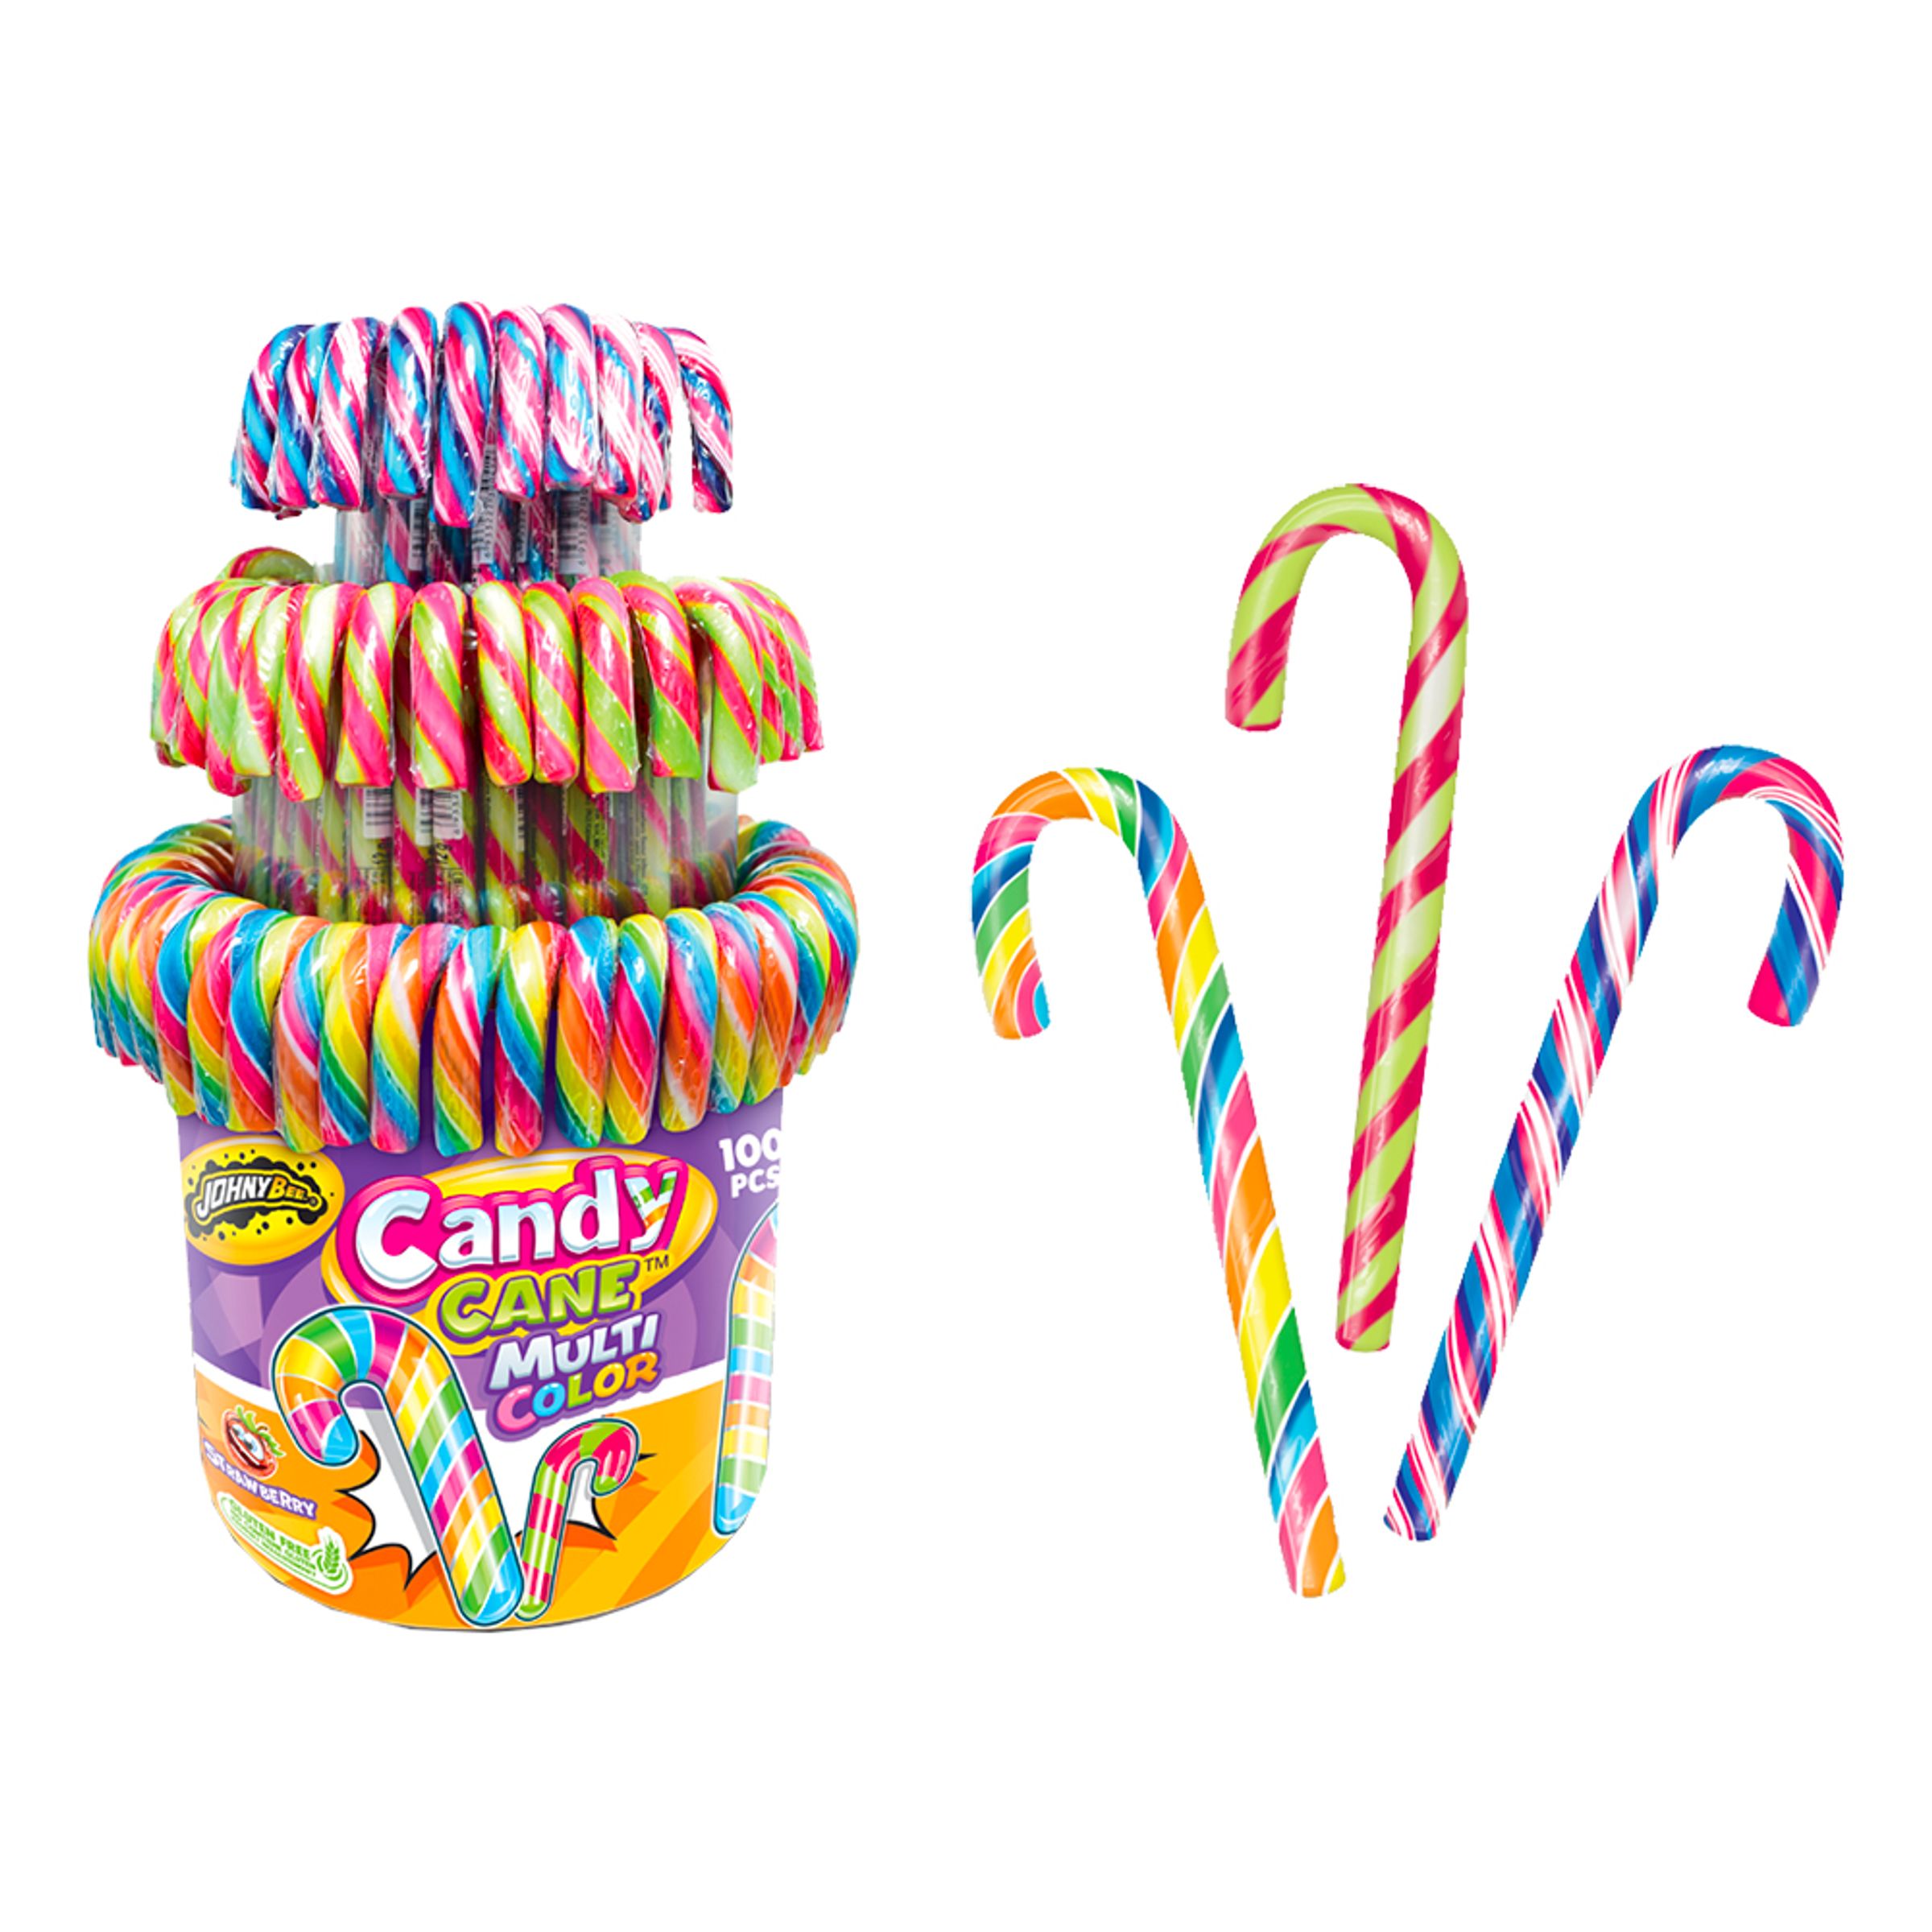 Candy Canes Flerfärgade - 100-pack